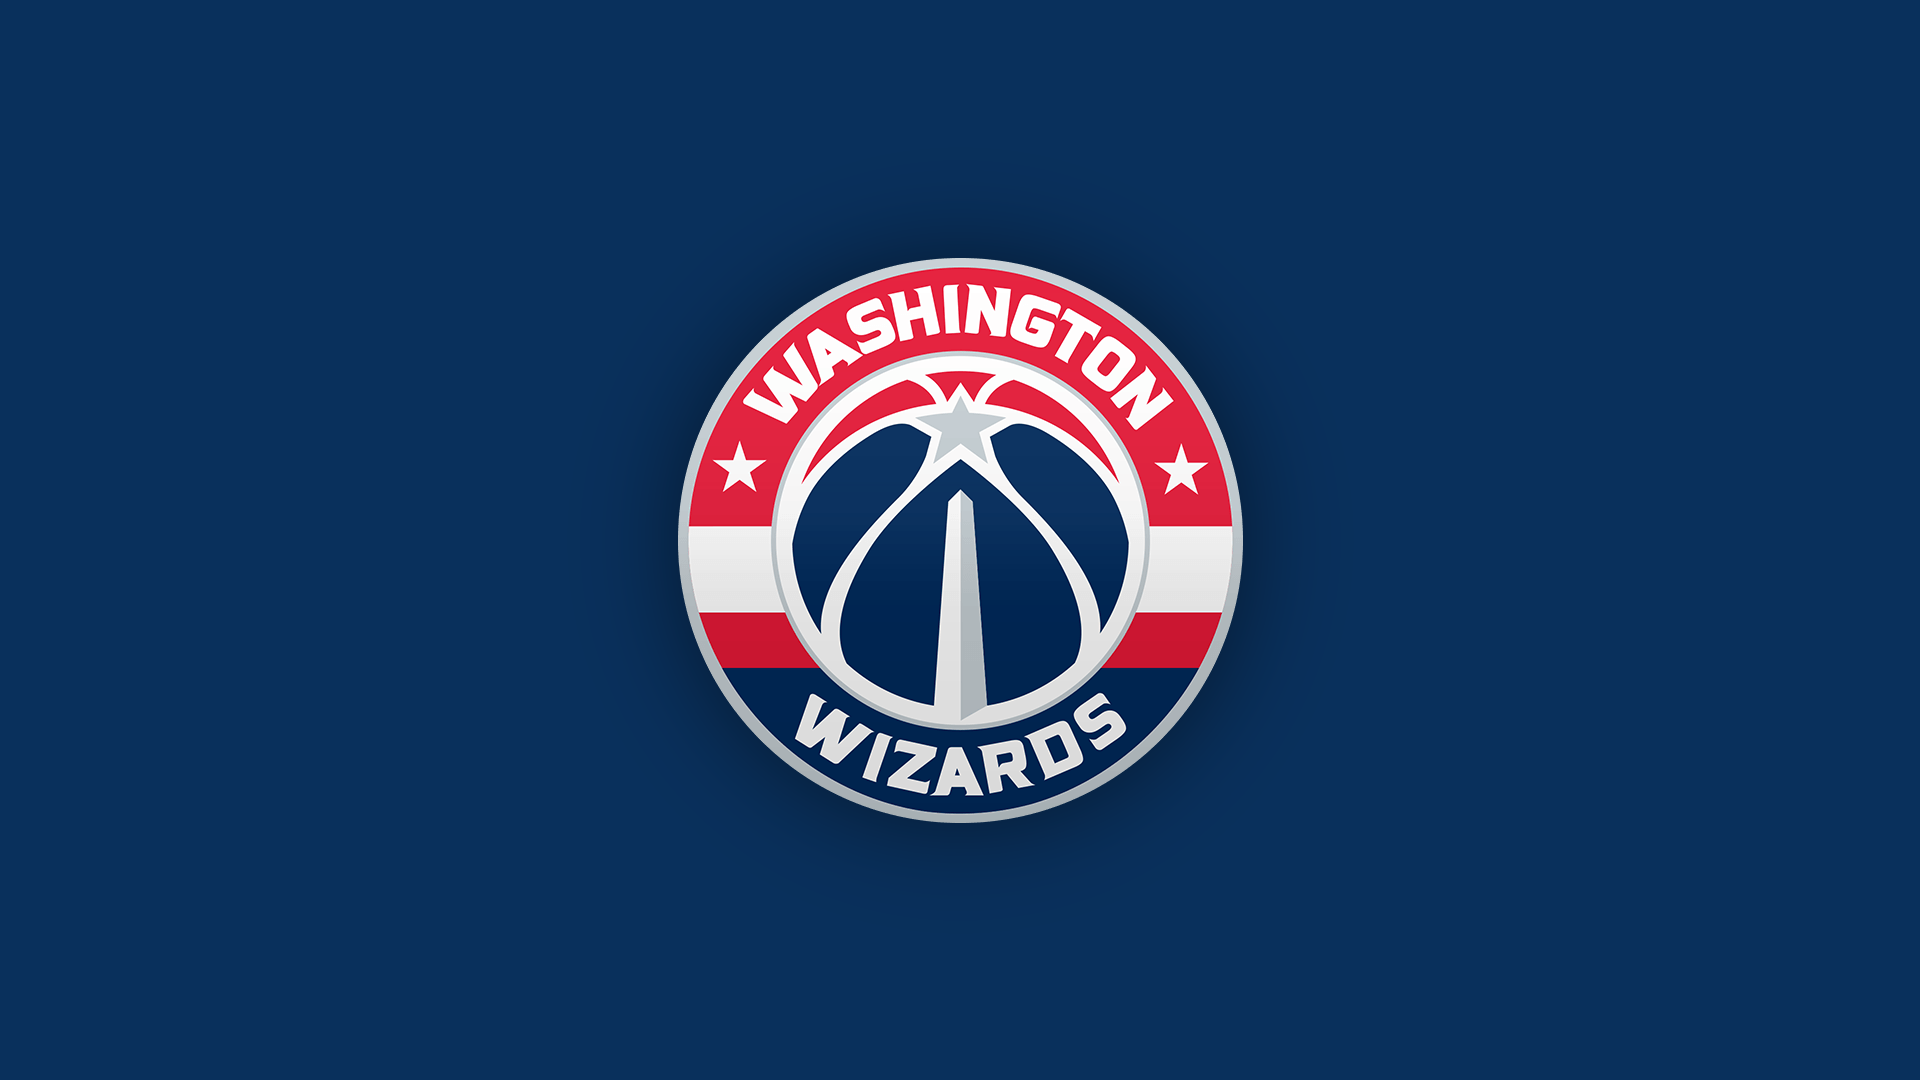 Watch the Washington Wizards on NBC Sports Washington – NBC4 Washington